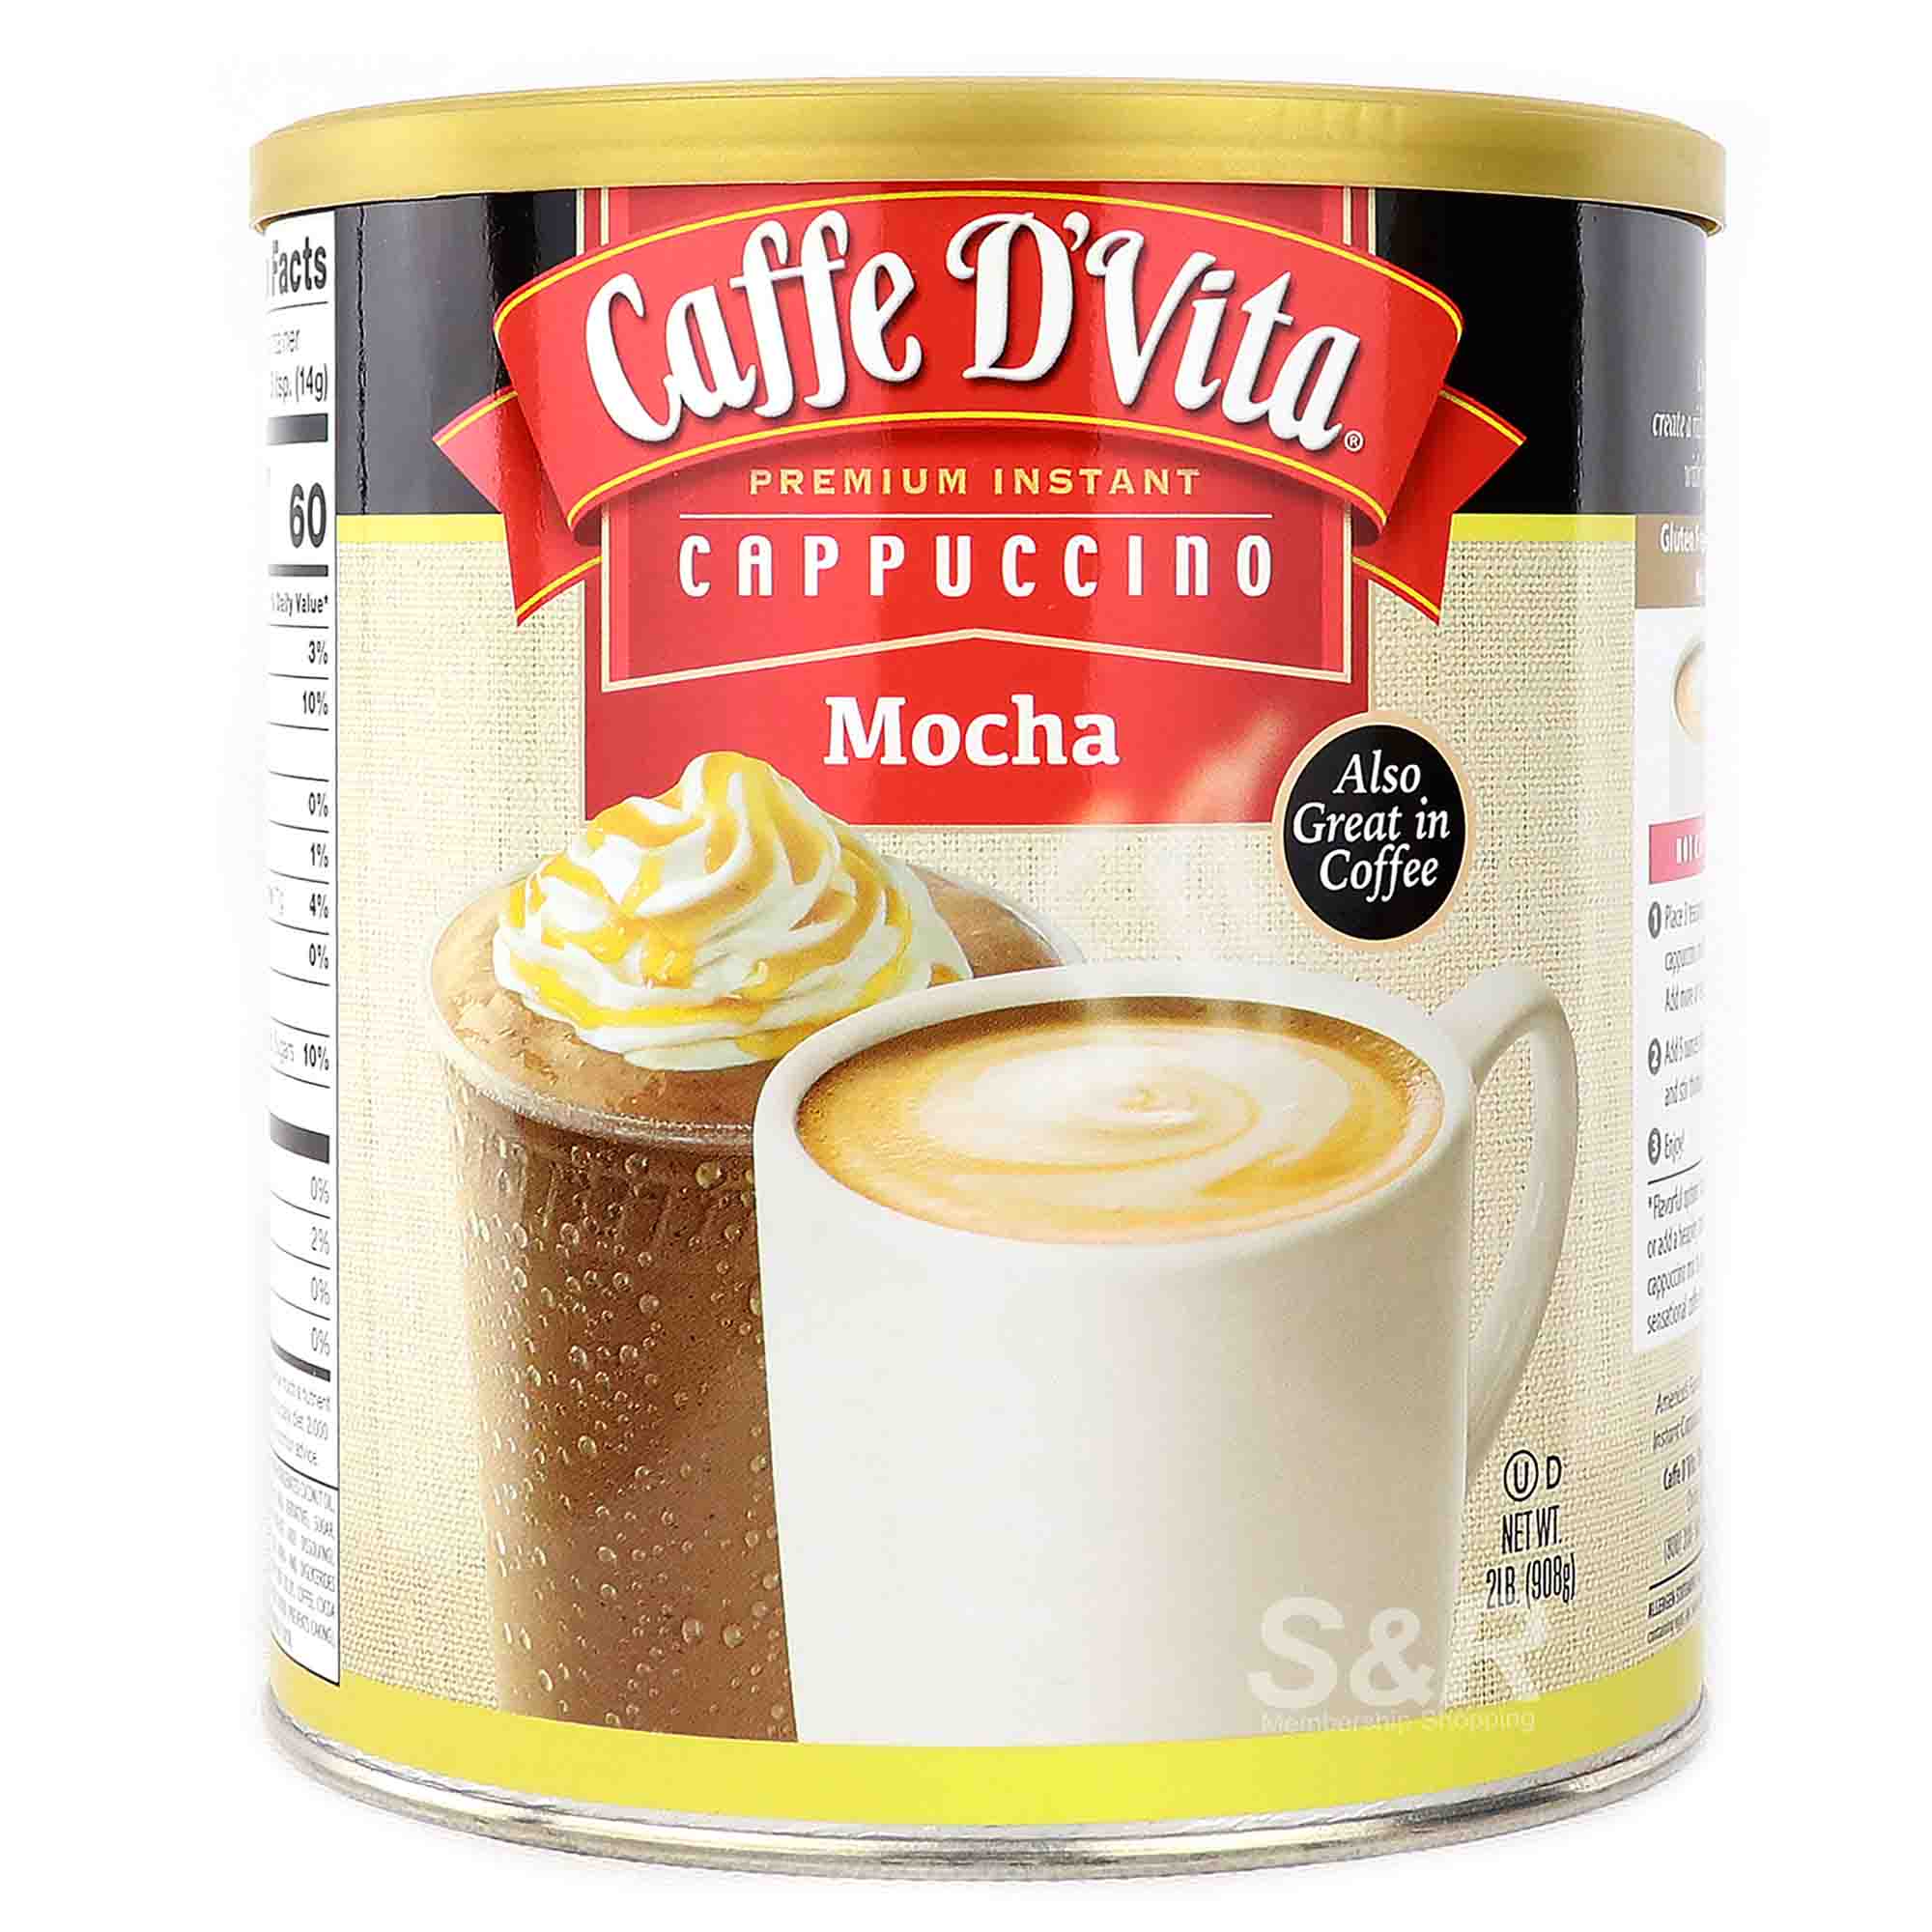 Caffe D'Vita Premium Instant Cappuccino Mocha 908g